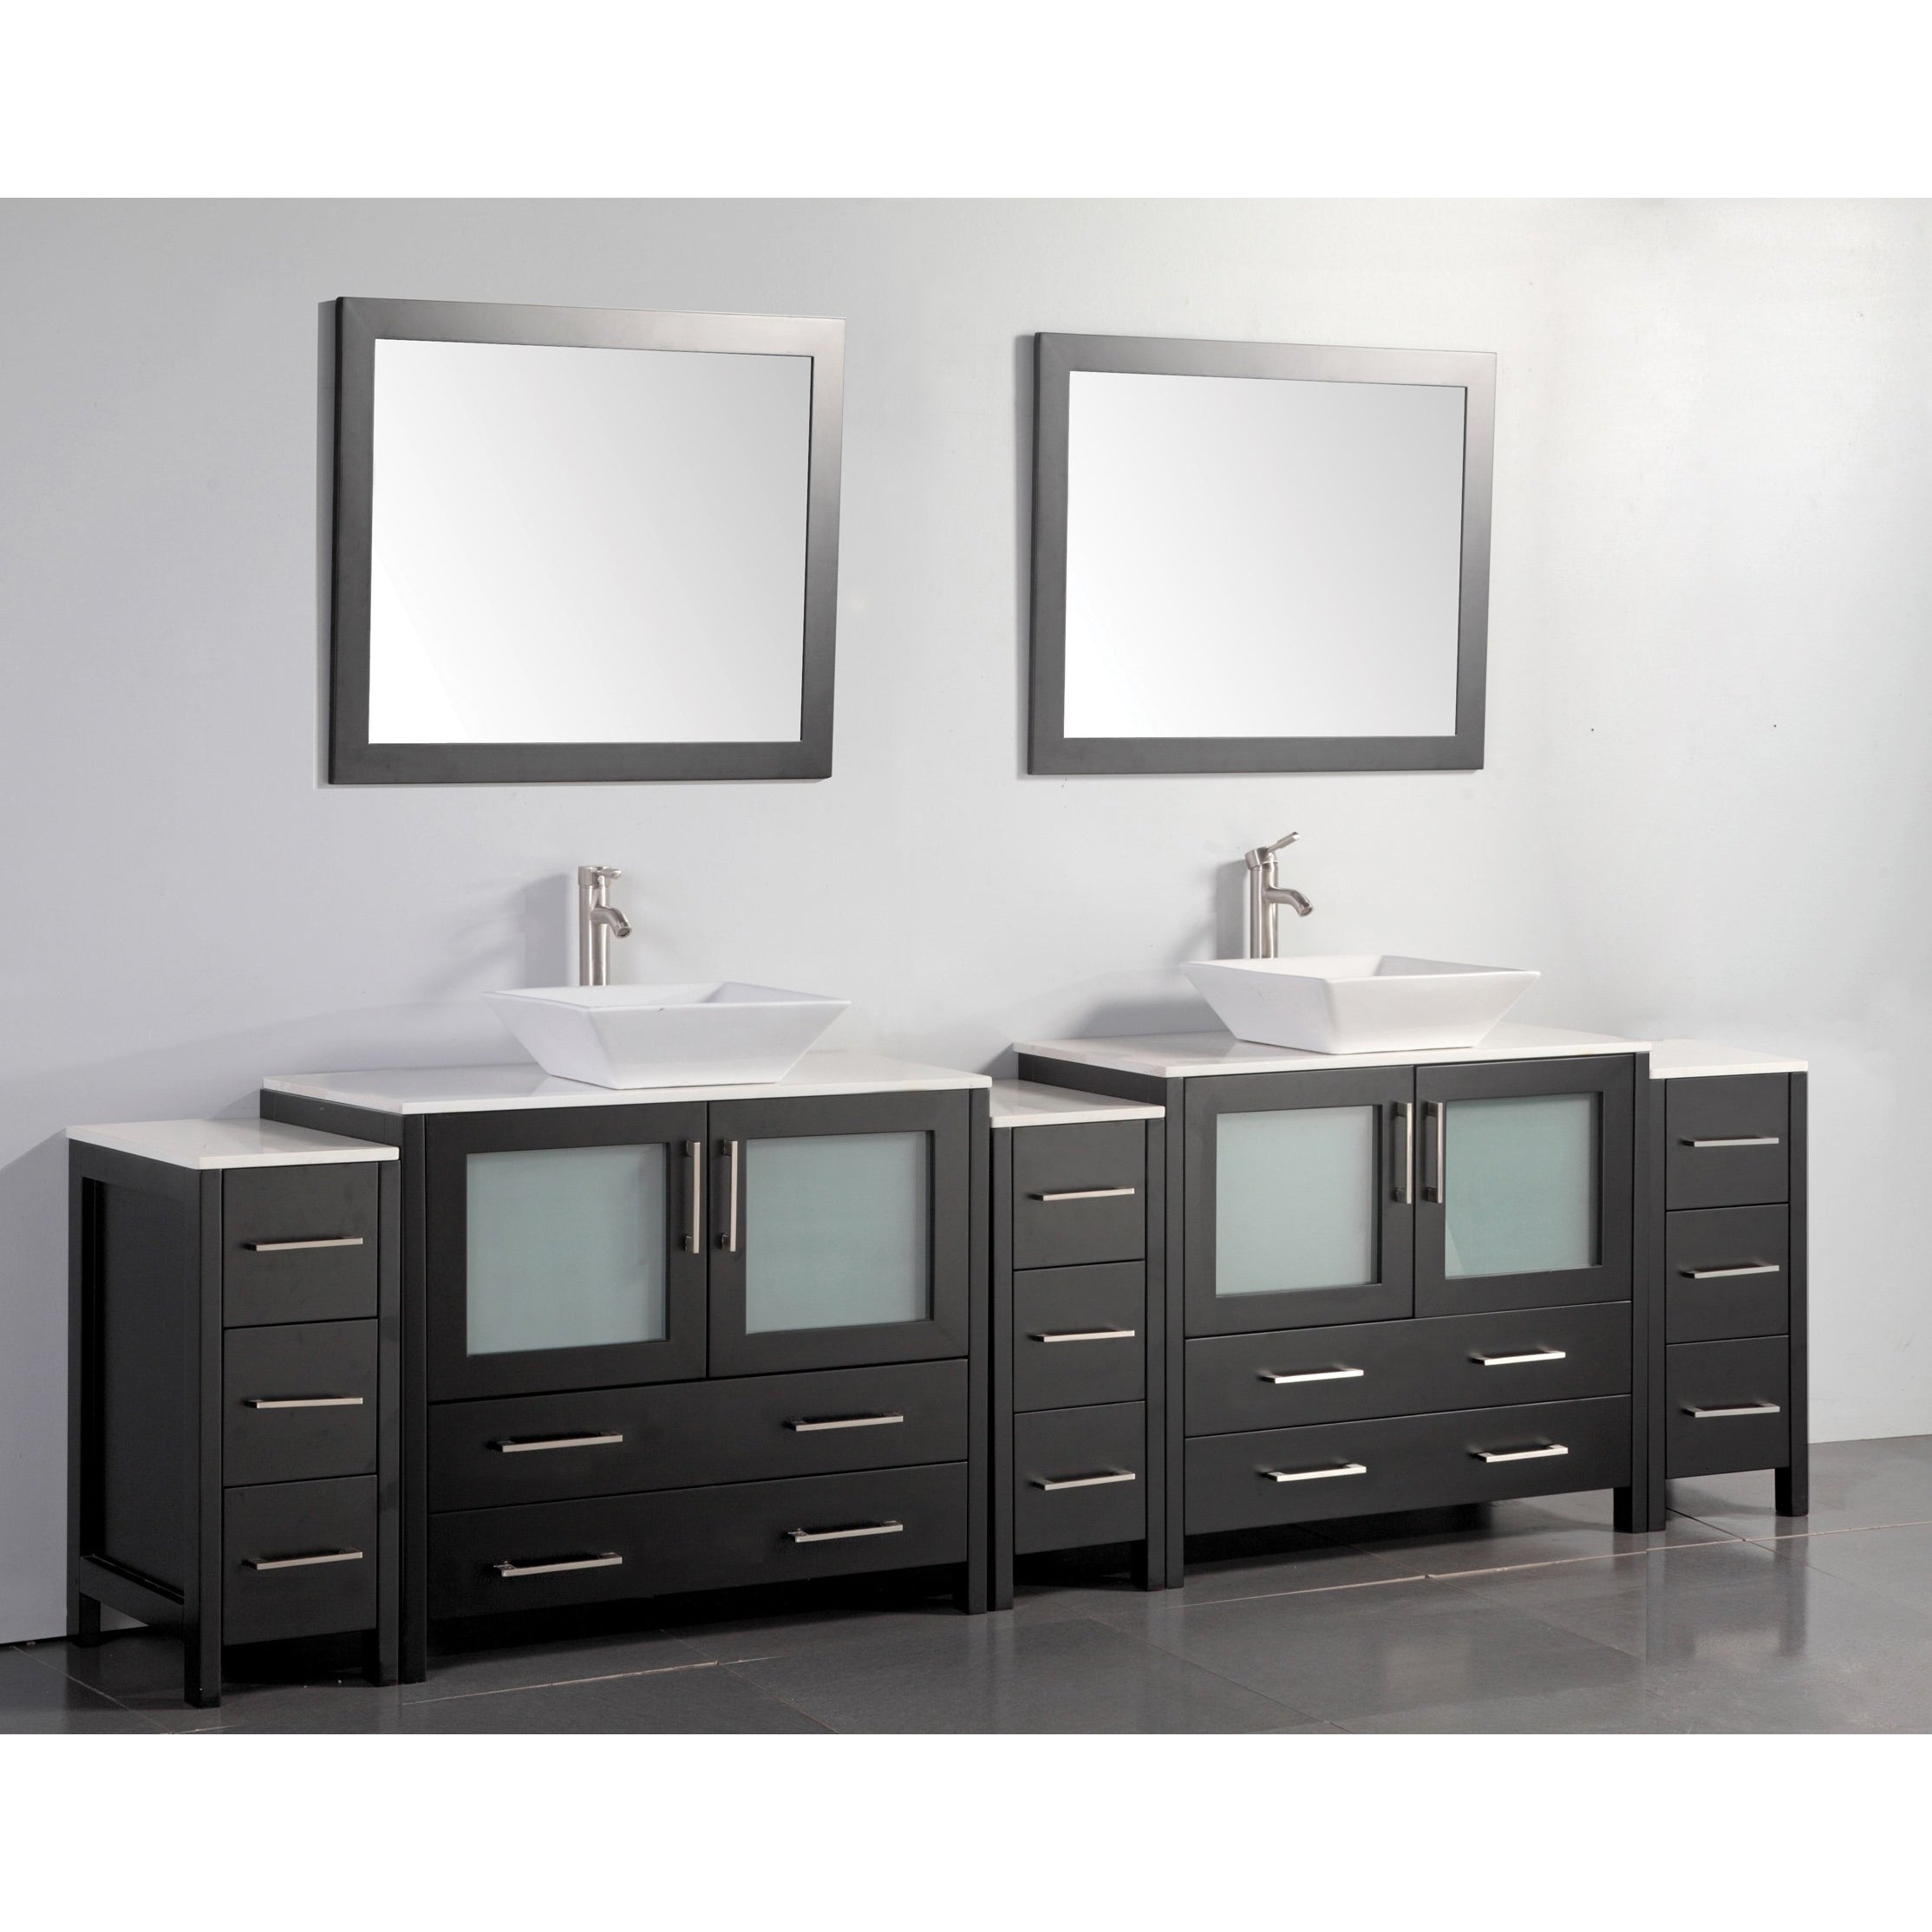 Vanity Art - Monaco 108" Double Vessel Sink Bathroom Vanity Set with Sinks and Mirrors - 3 Side Cabinets - Bhdepot 